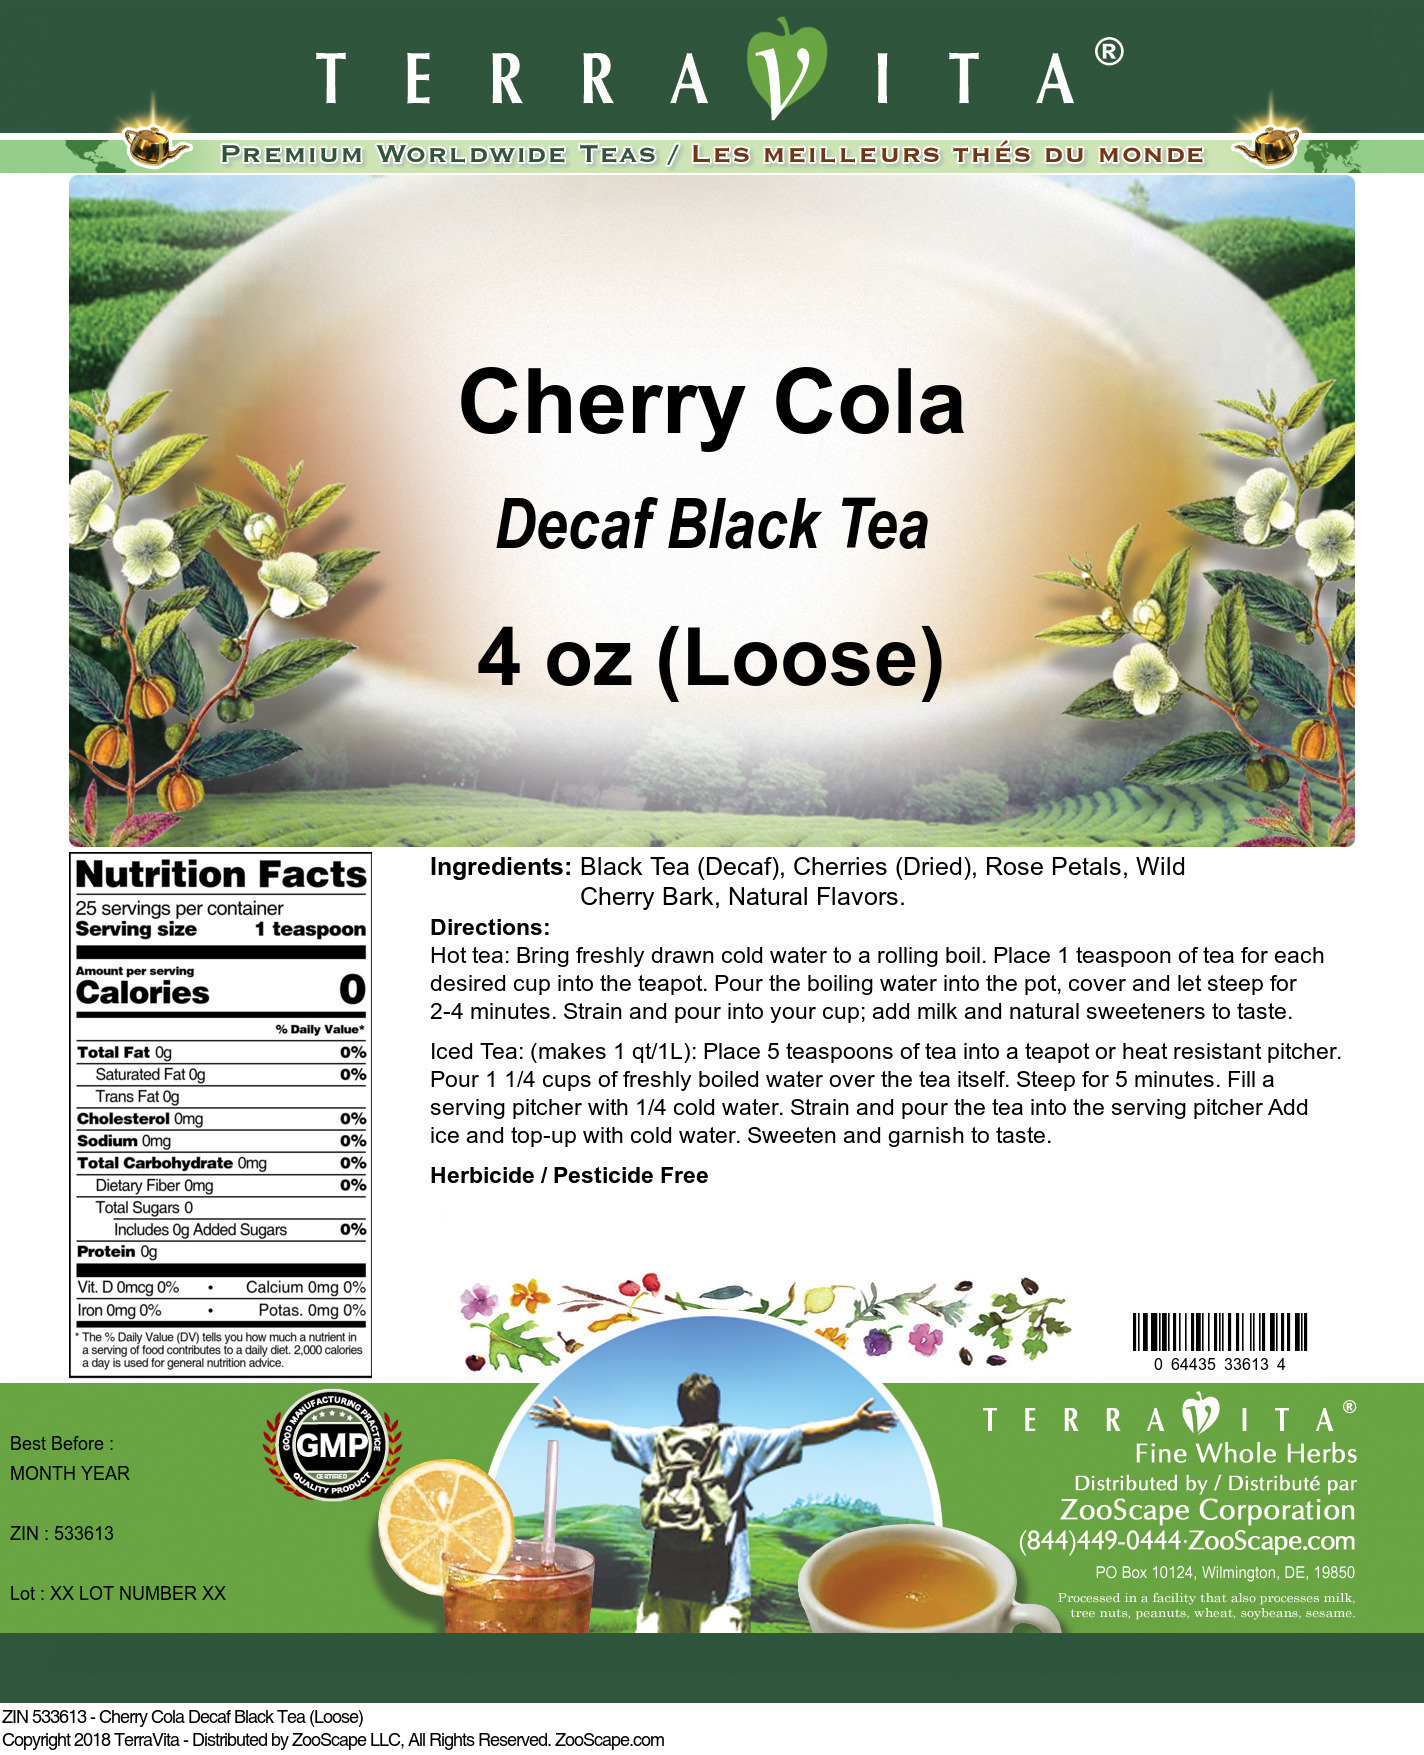 Cherry Cola Decaf Black Tea (Loose) - Label